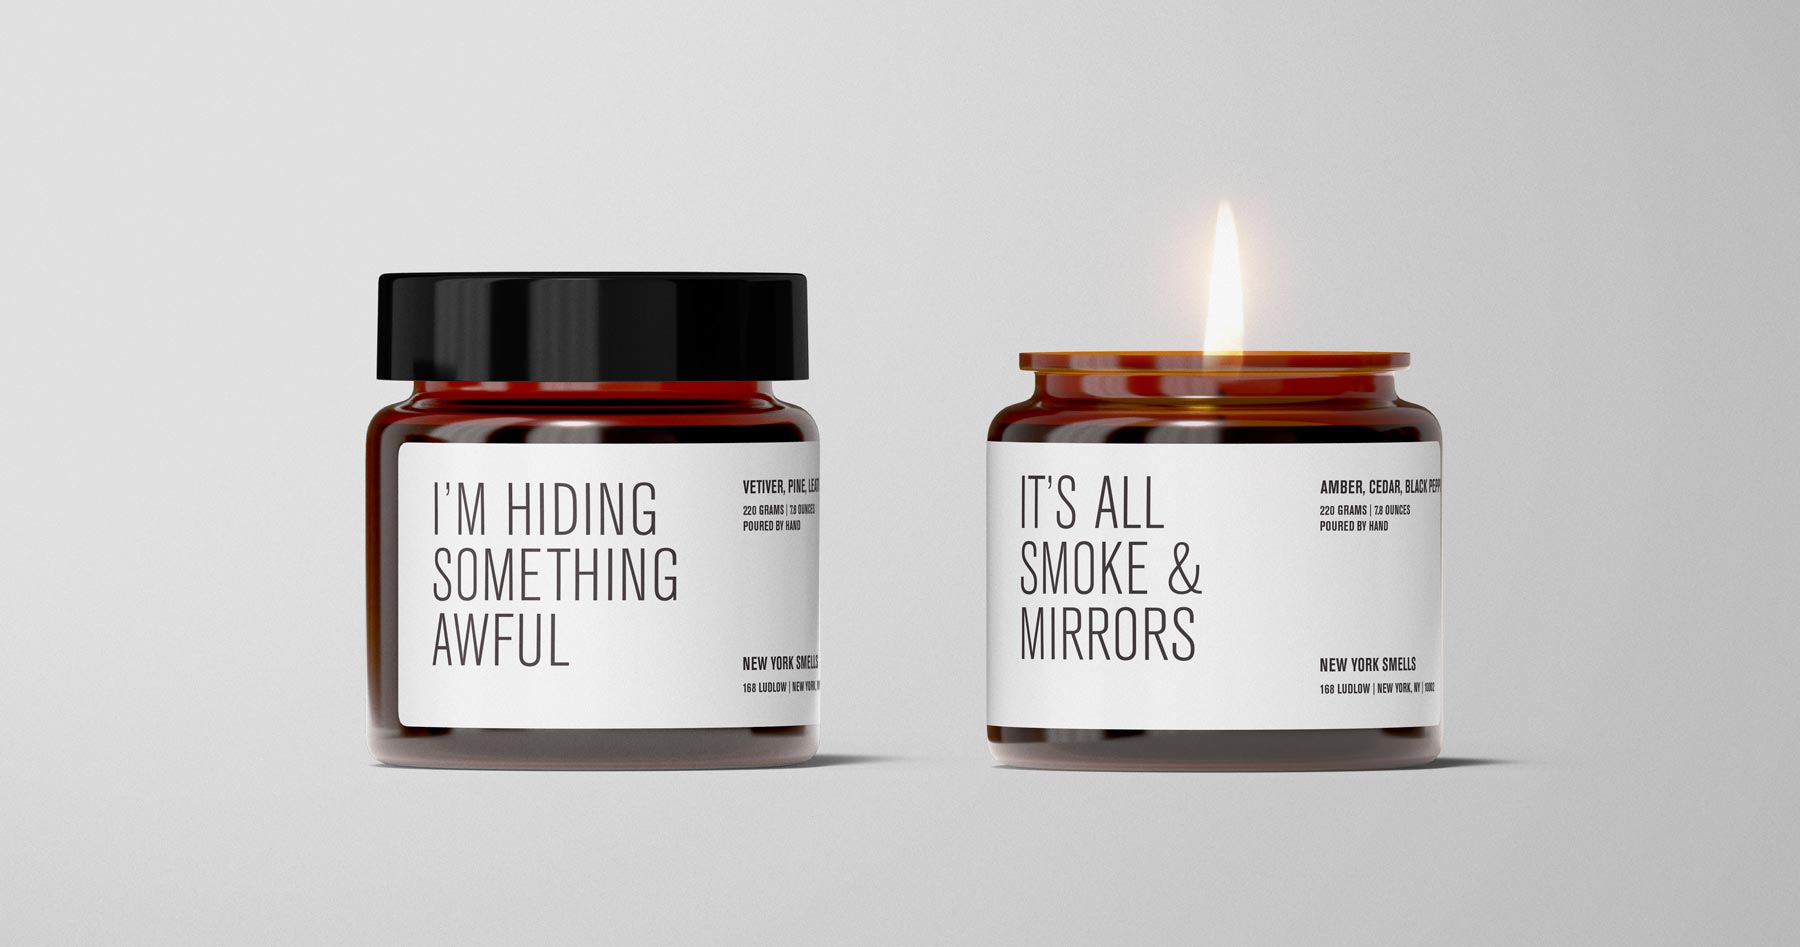 kris-poorbaugh-designer-new-york-smells-candle-02